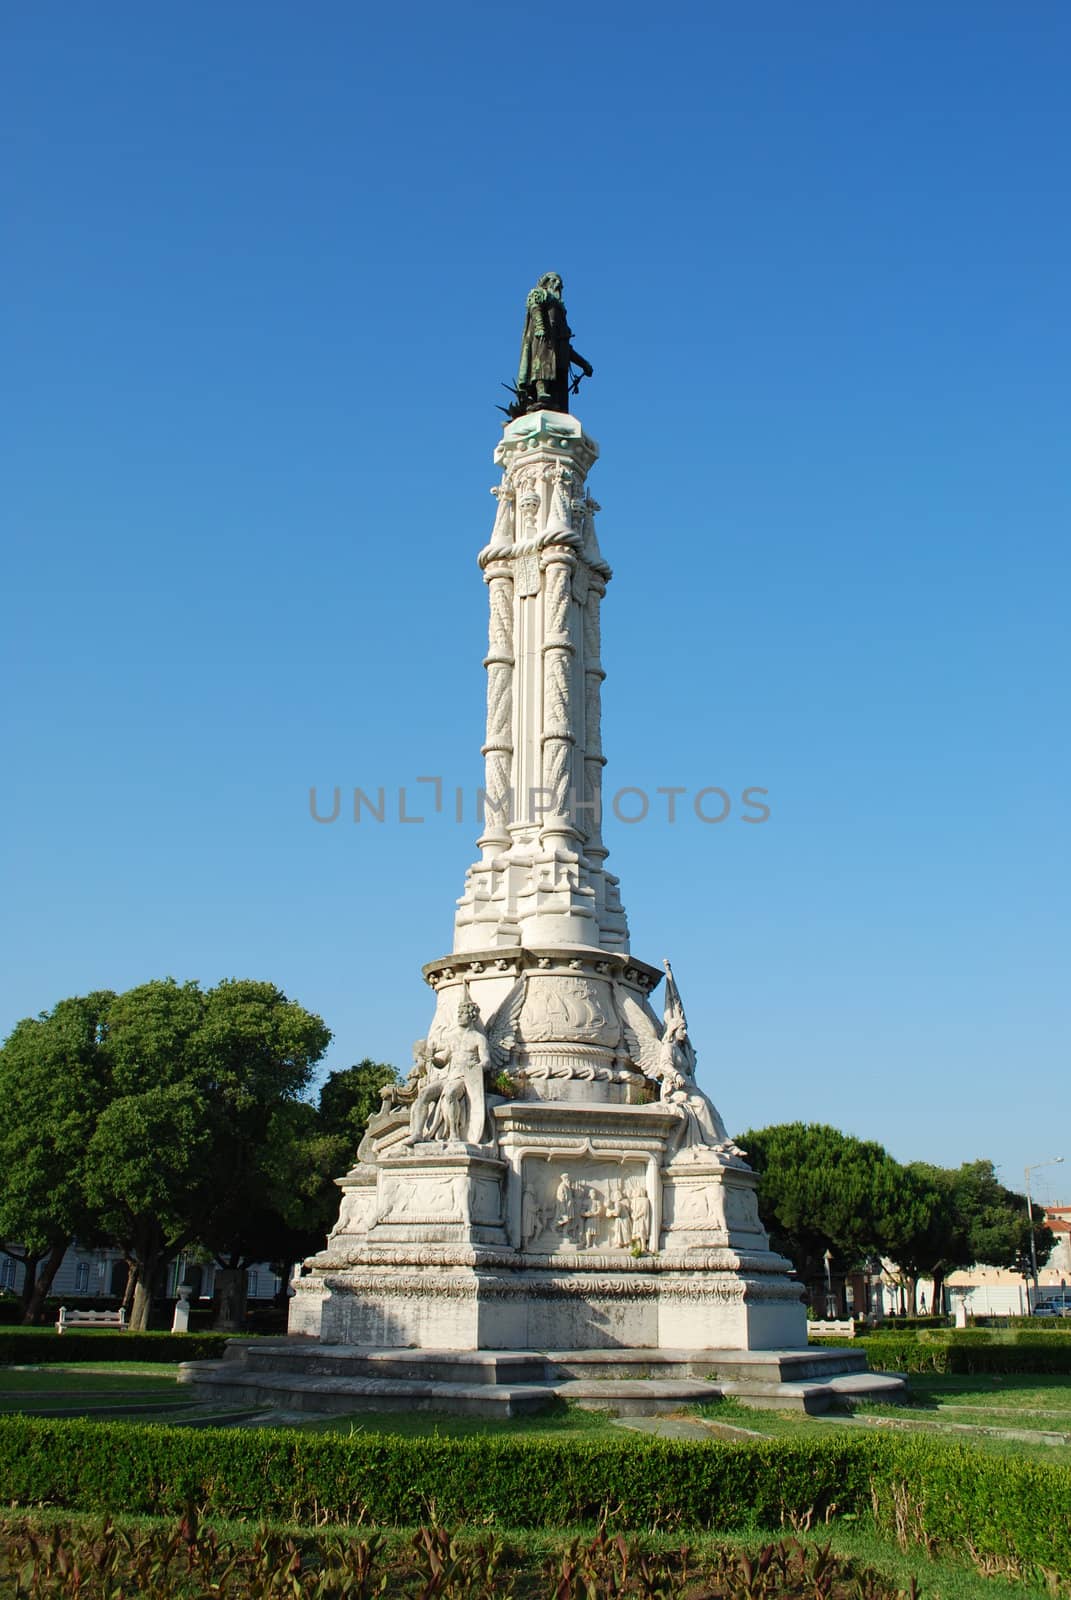 famous discovery statue of "Vasco da Gama" in Lisbon